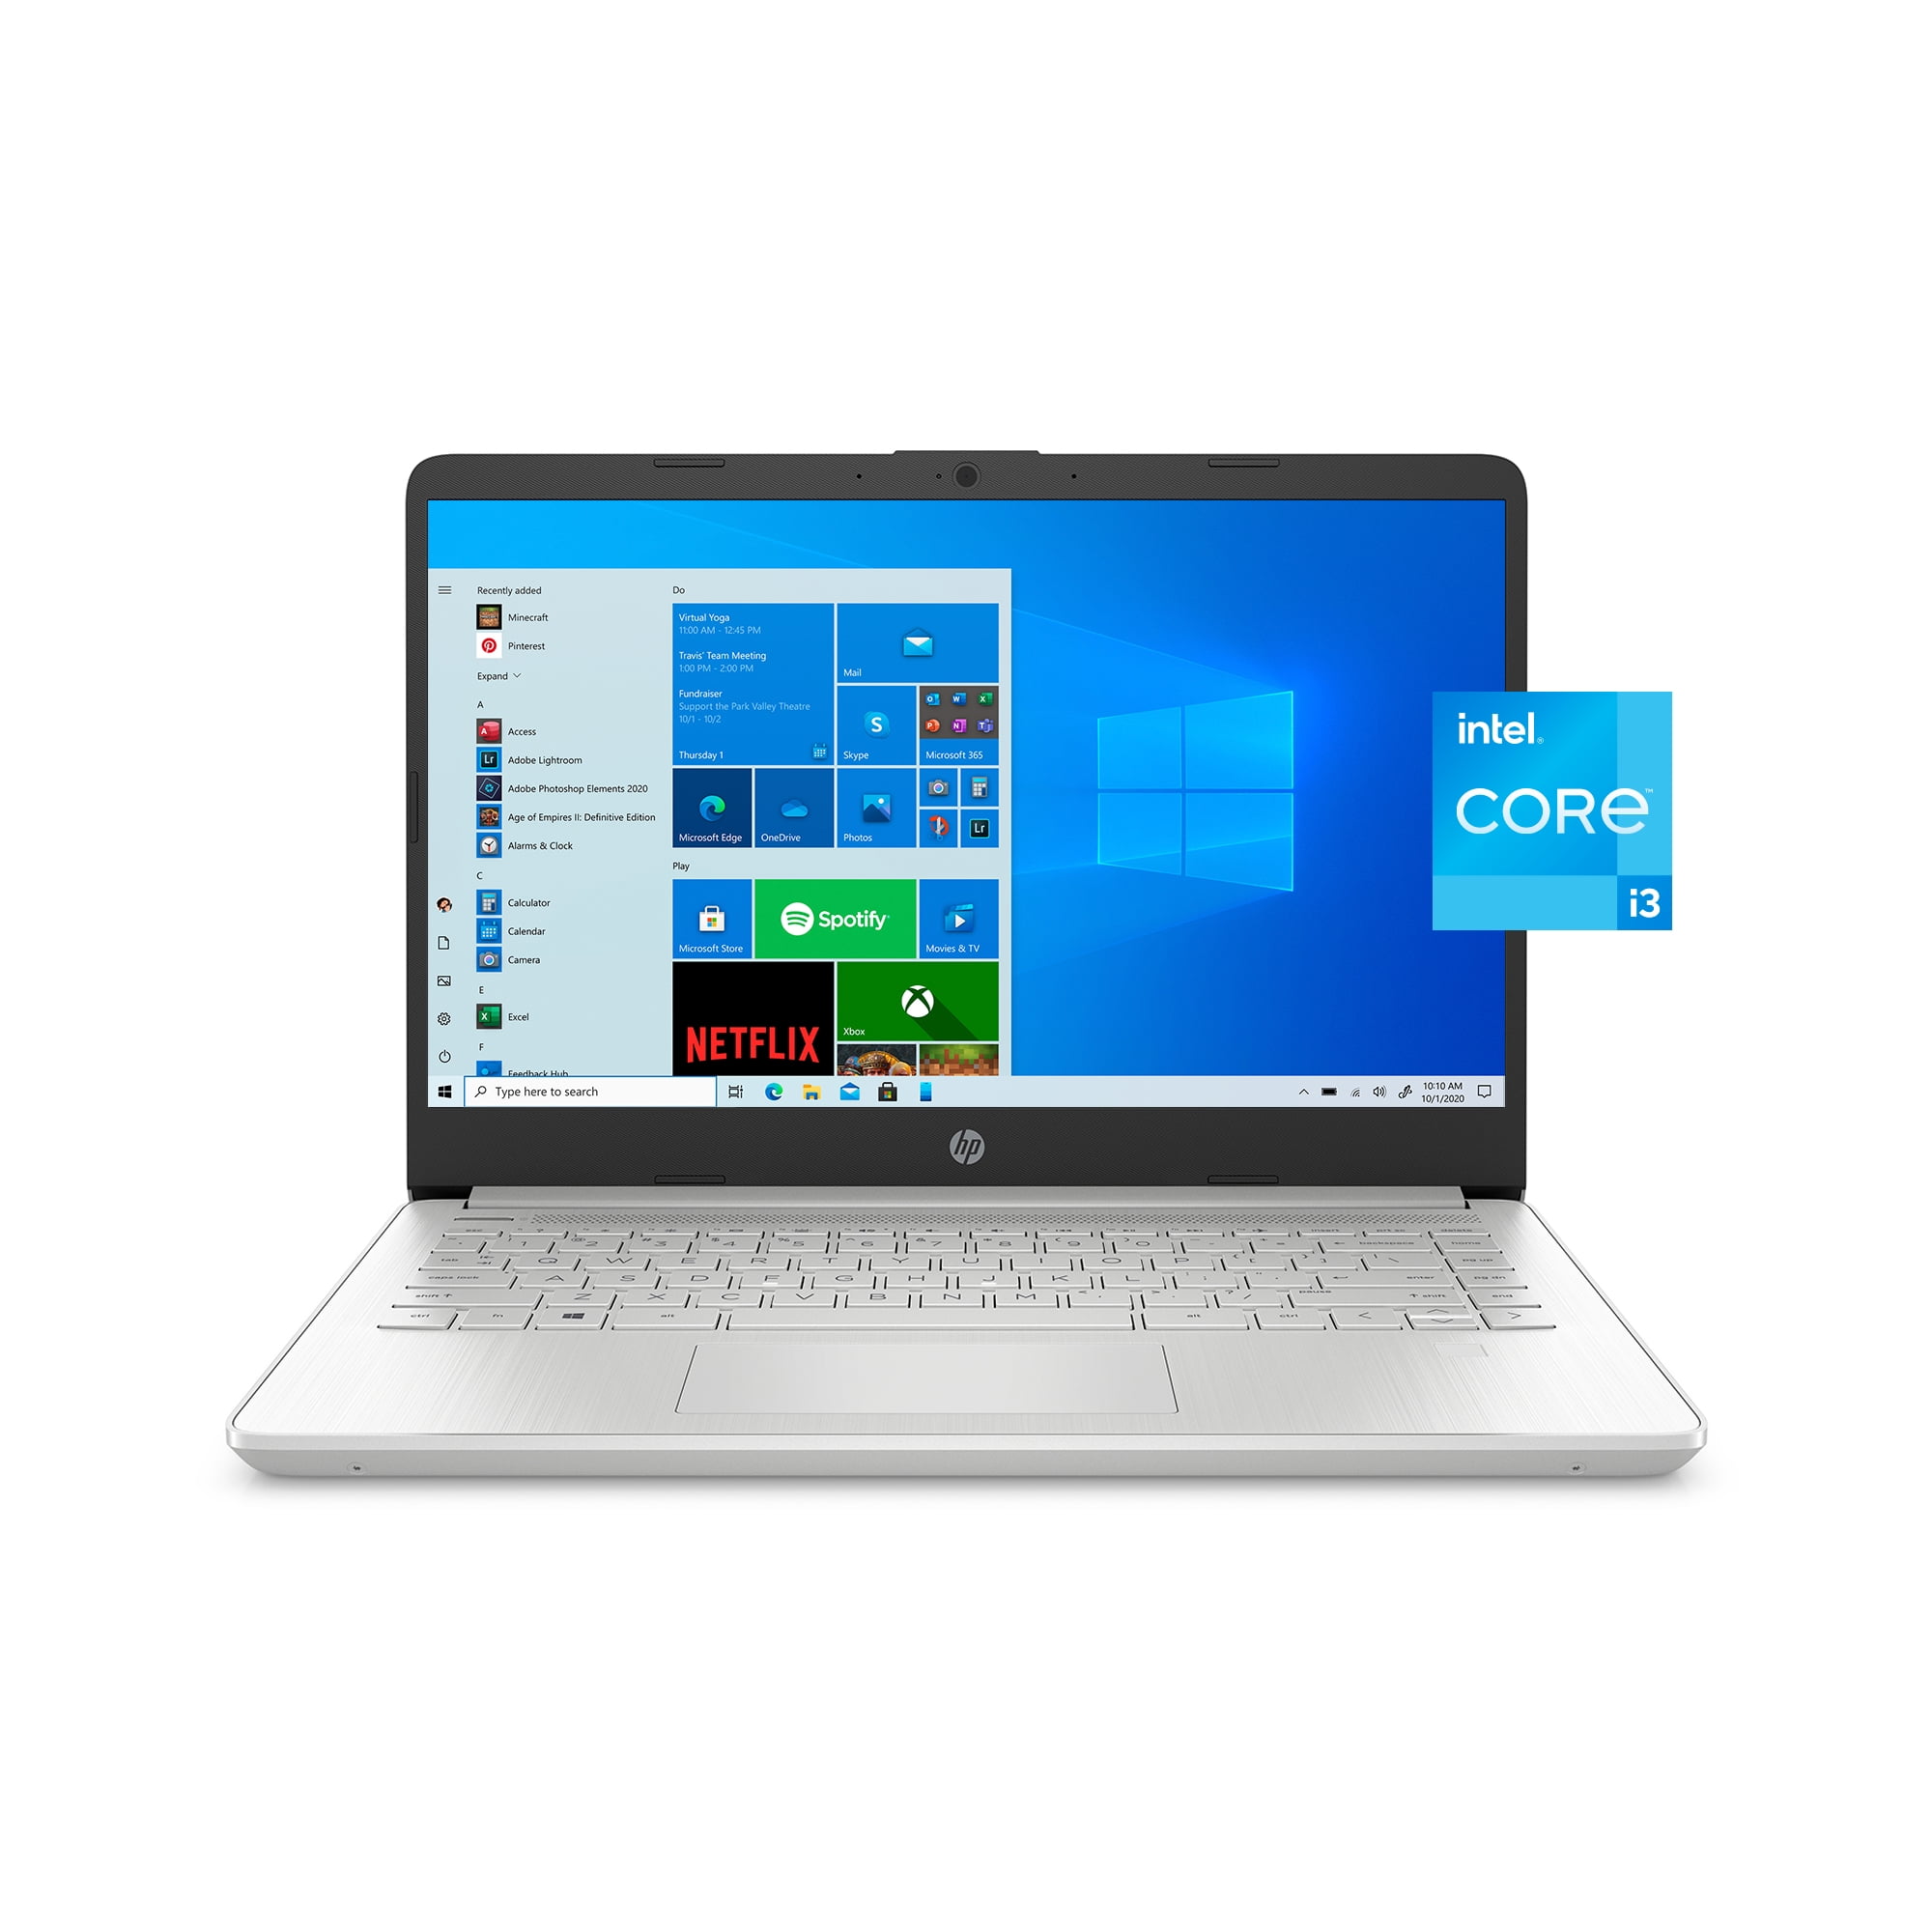 HP FHD PC Laptop, Intel Core 4GB RAM, 256GB SSD, Windows 10 Home (S mode), Silver, 14-dq2055wm - Walmart.com